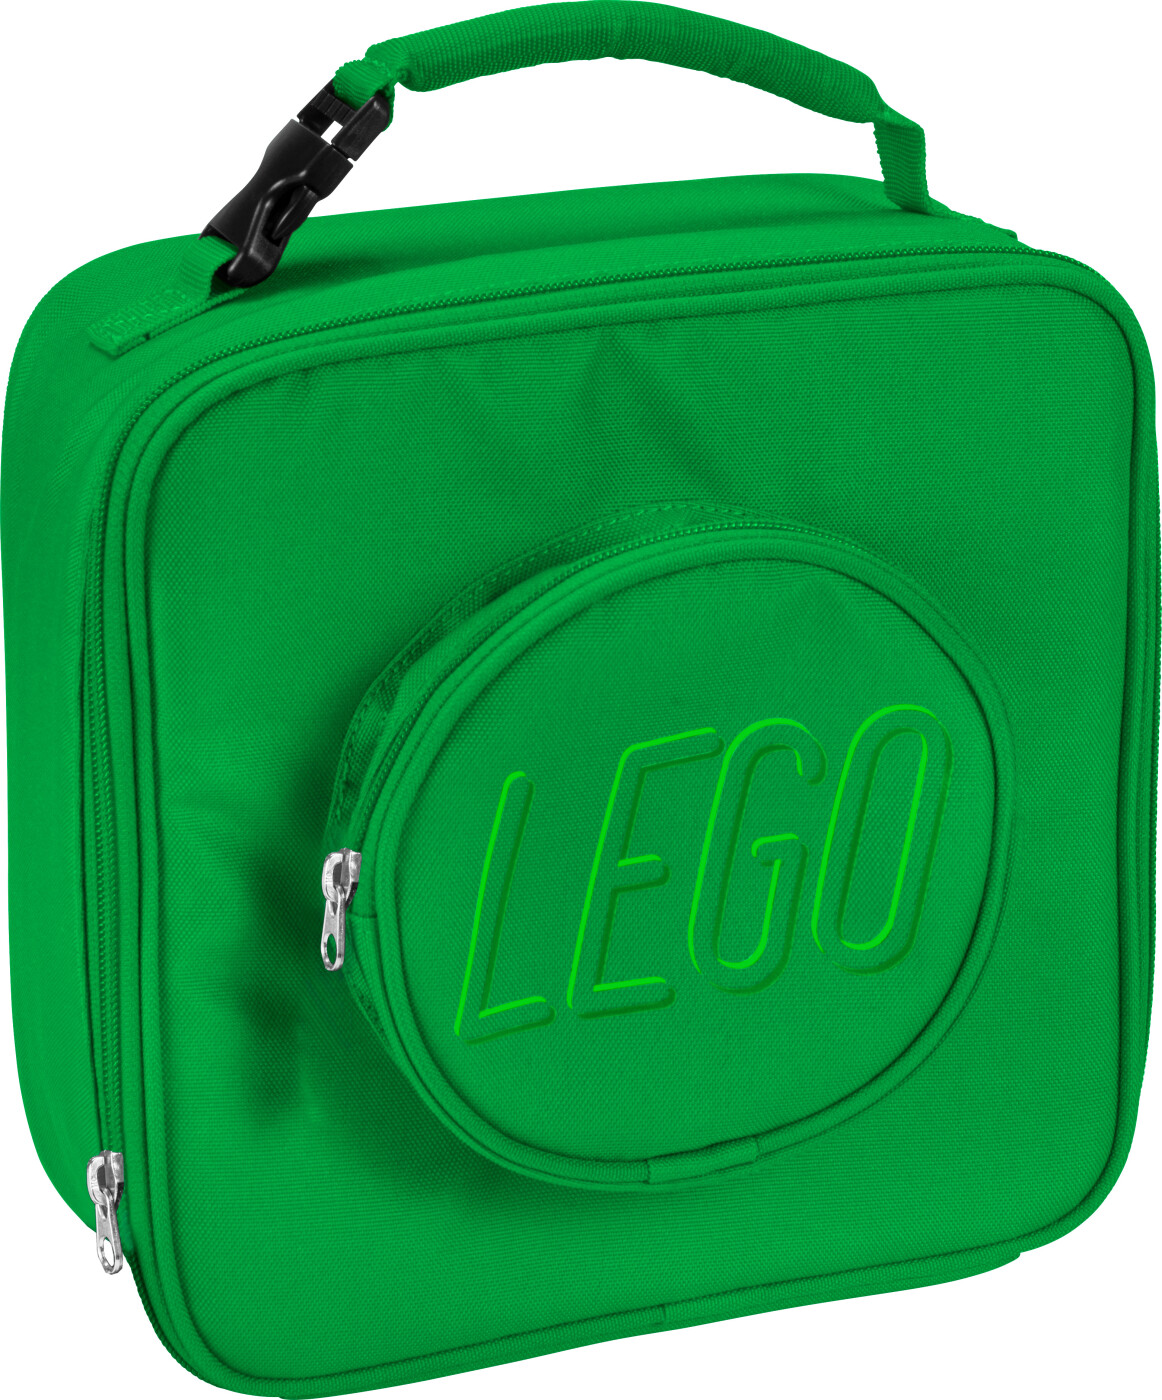 8: Lego - Legoklods Madpakke Taske - 5 L - Grøn